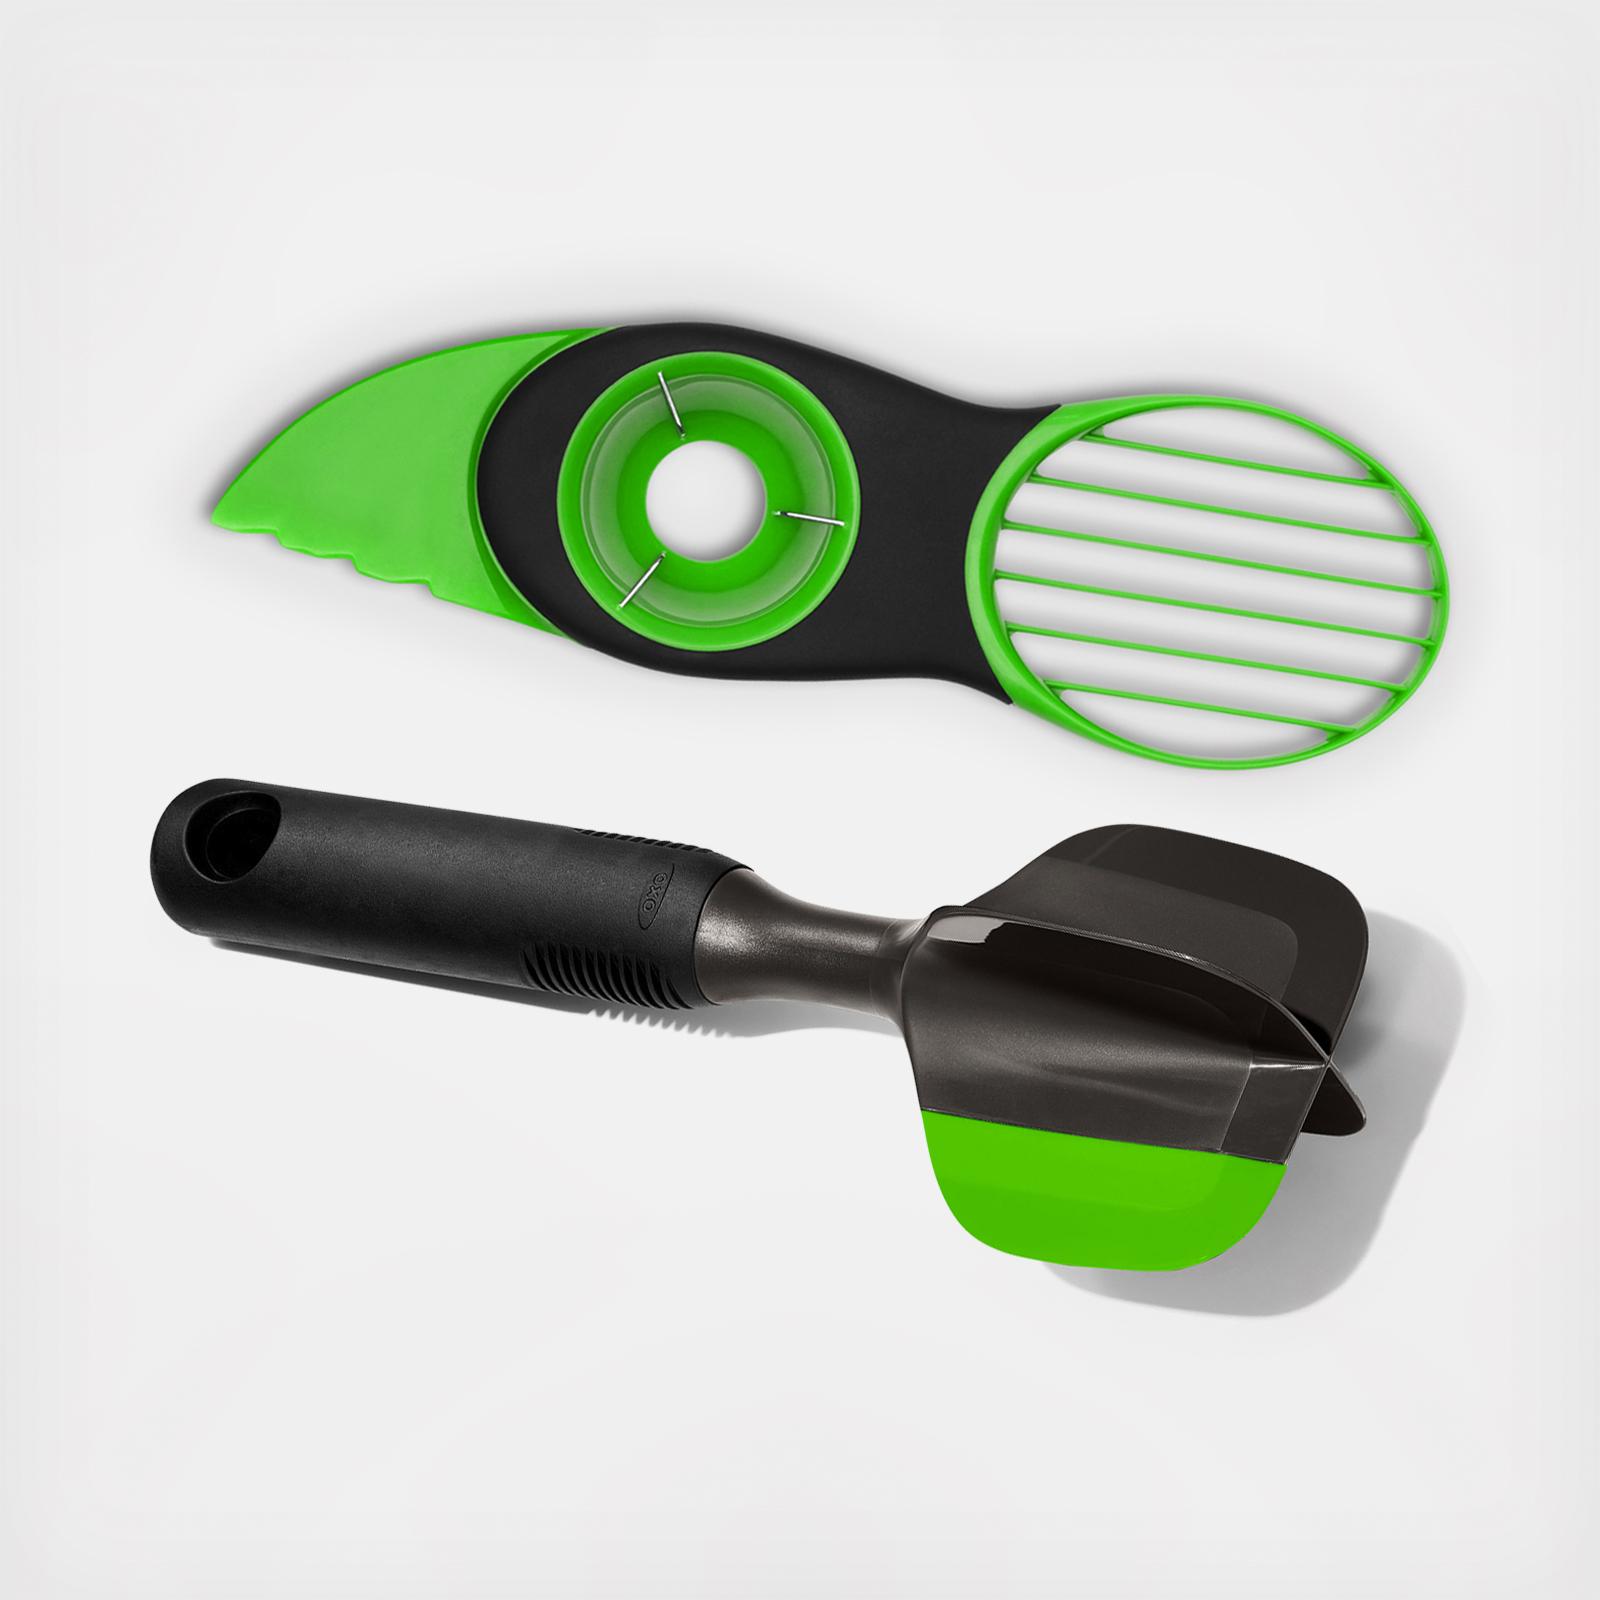 OXO Good Grips Smash & Scoop Avocado Tool